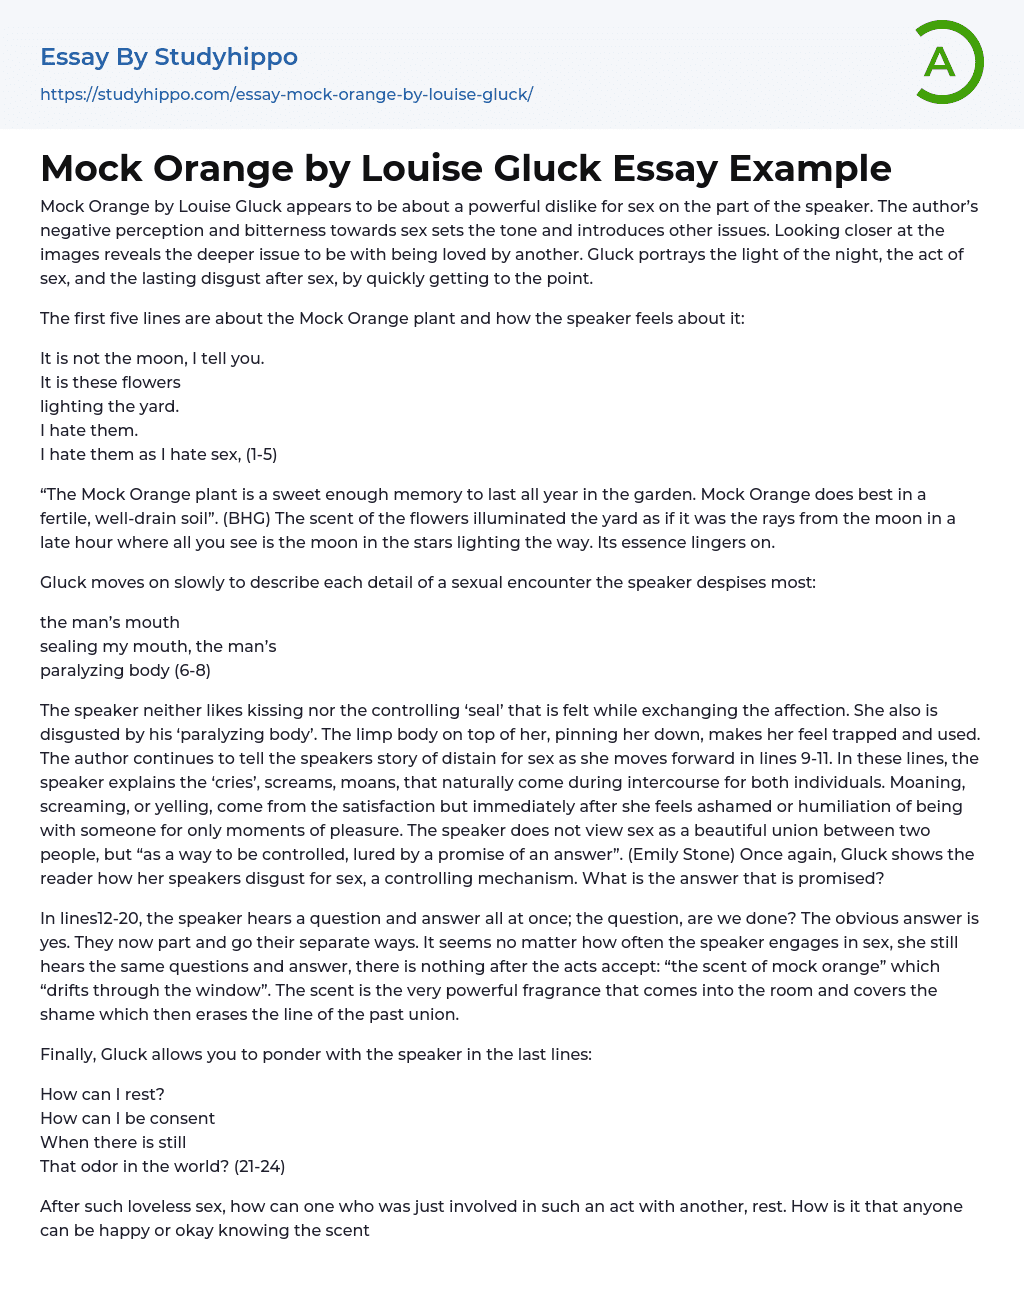 Mock Orange by Louise Gluck Essay Example